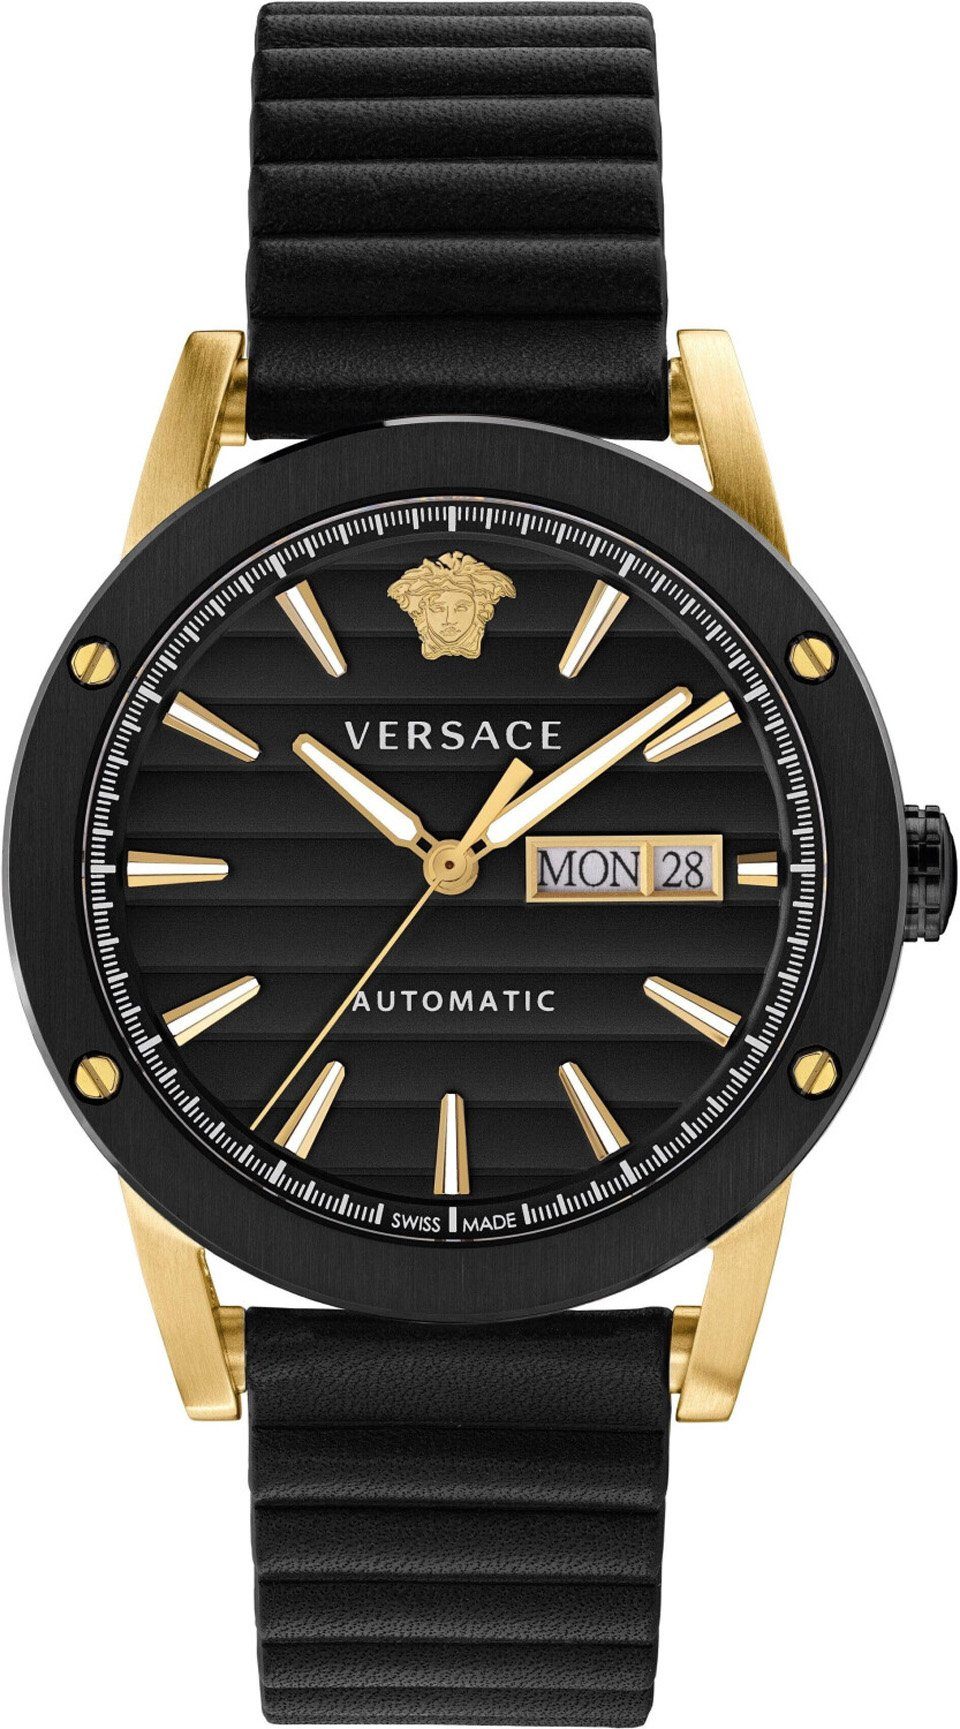 Made Uhr Herren Versace VEDX00419 Automatikuhr Theros Swiss